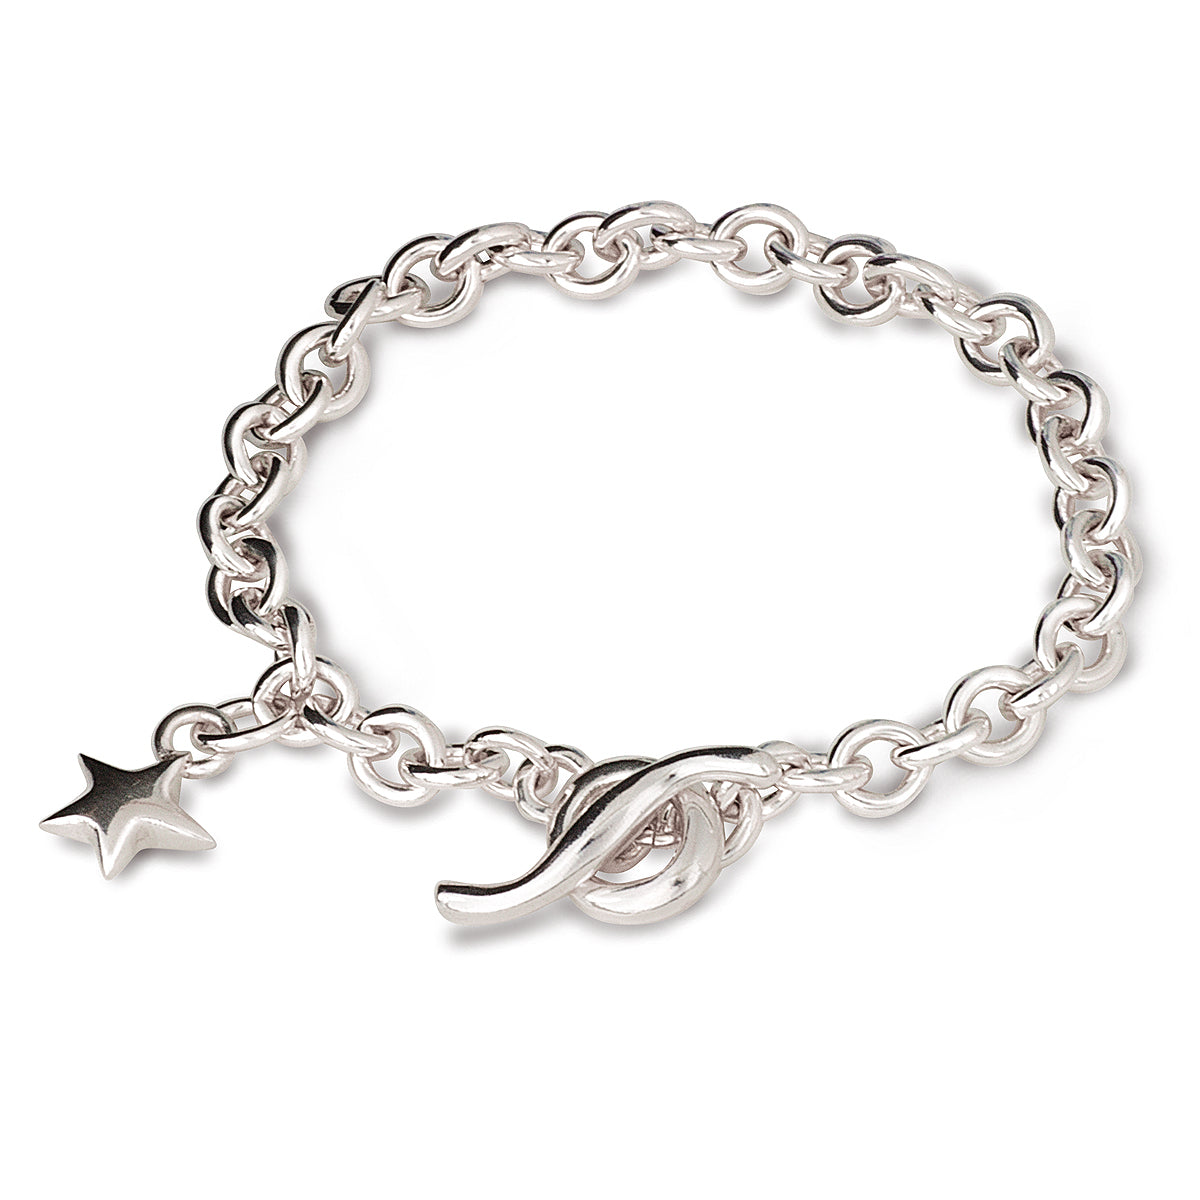 Star classic heavy silver charm bracelet with t-bar Scarlett Jewellery vintage 90s style